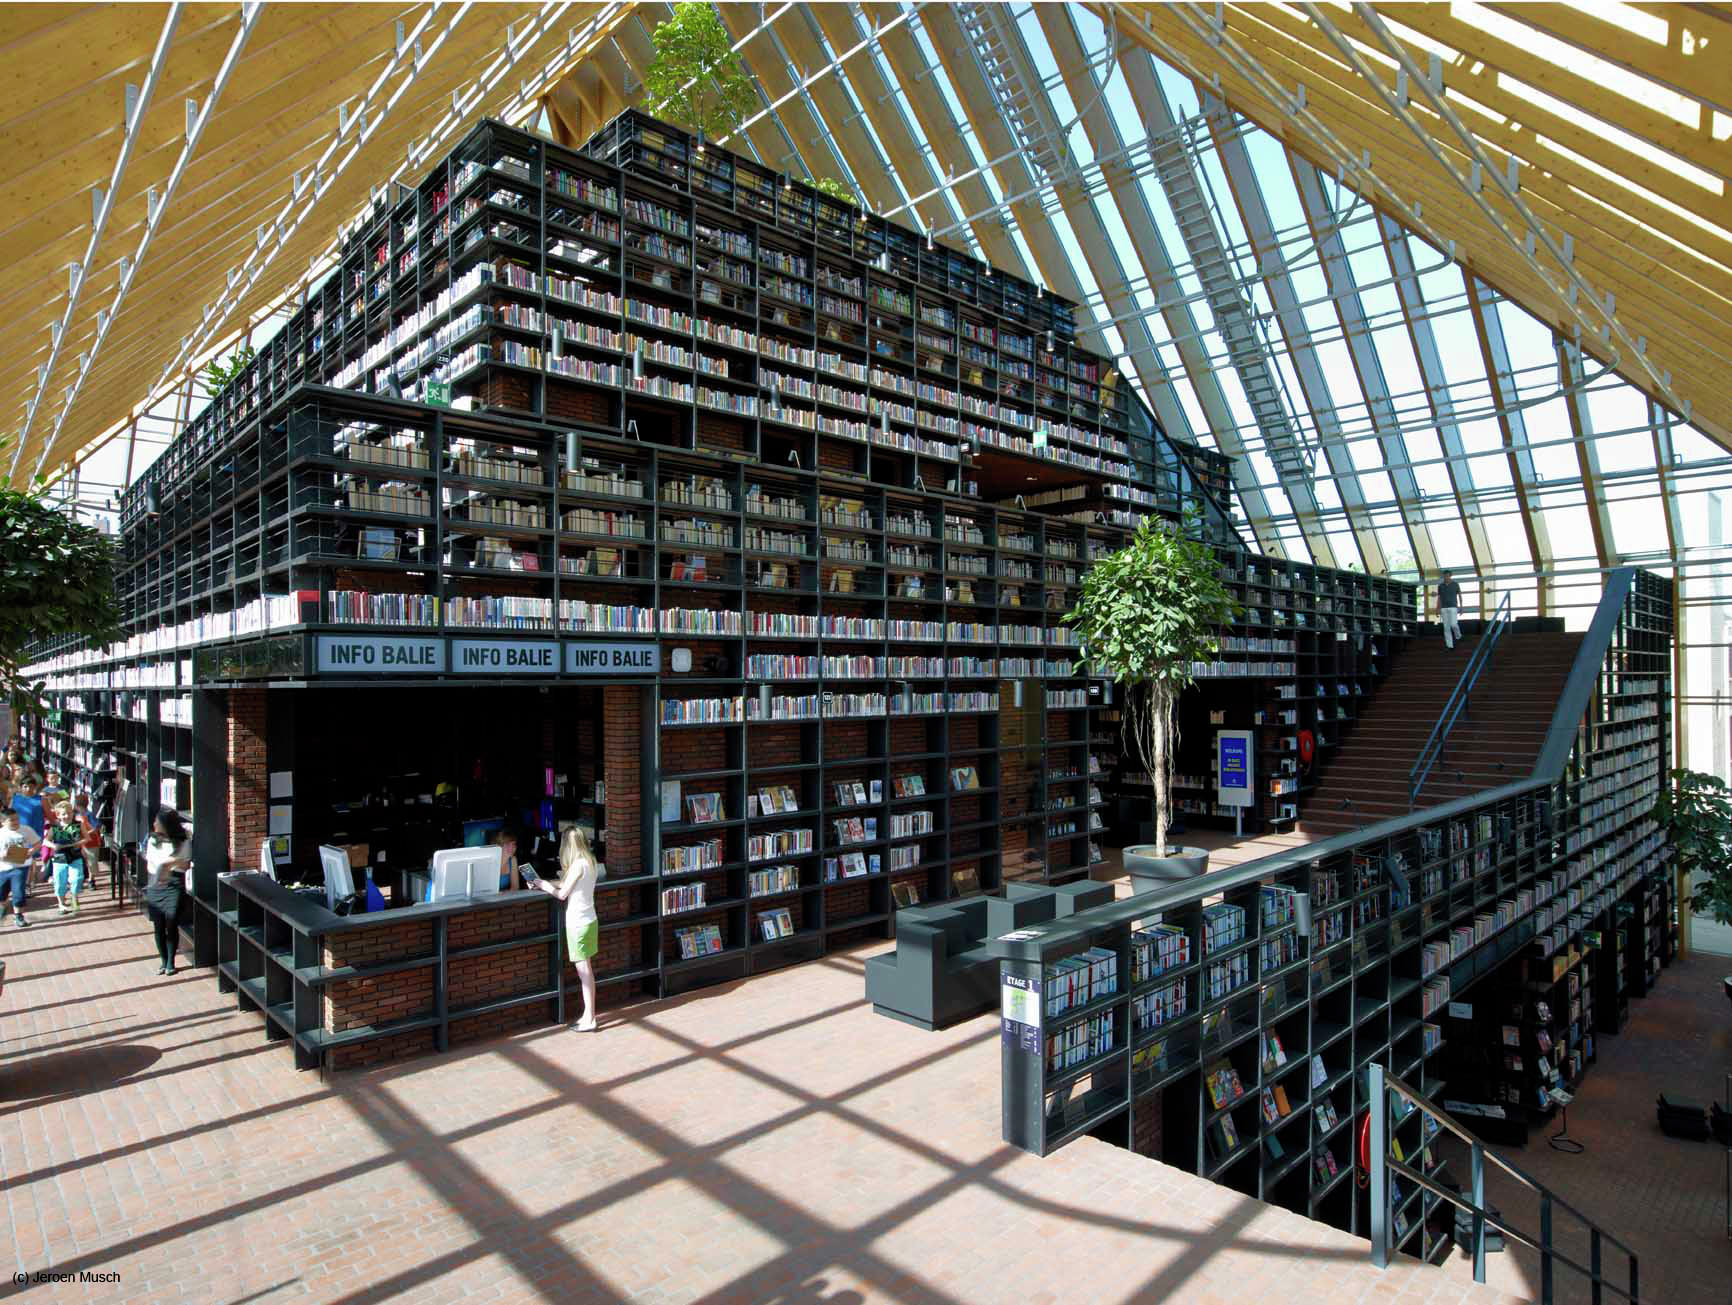 Book Mountain – Public Library Spijkenisse